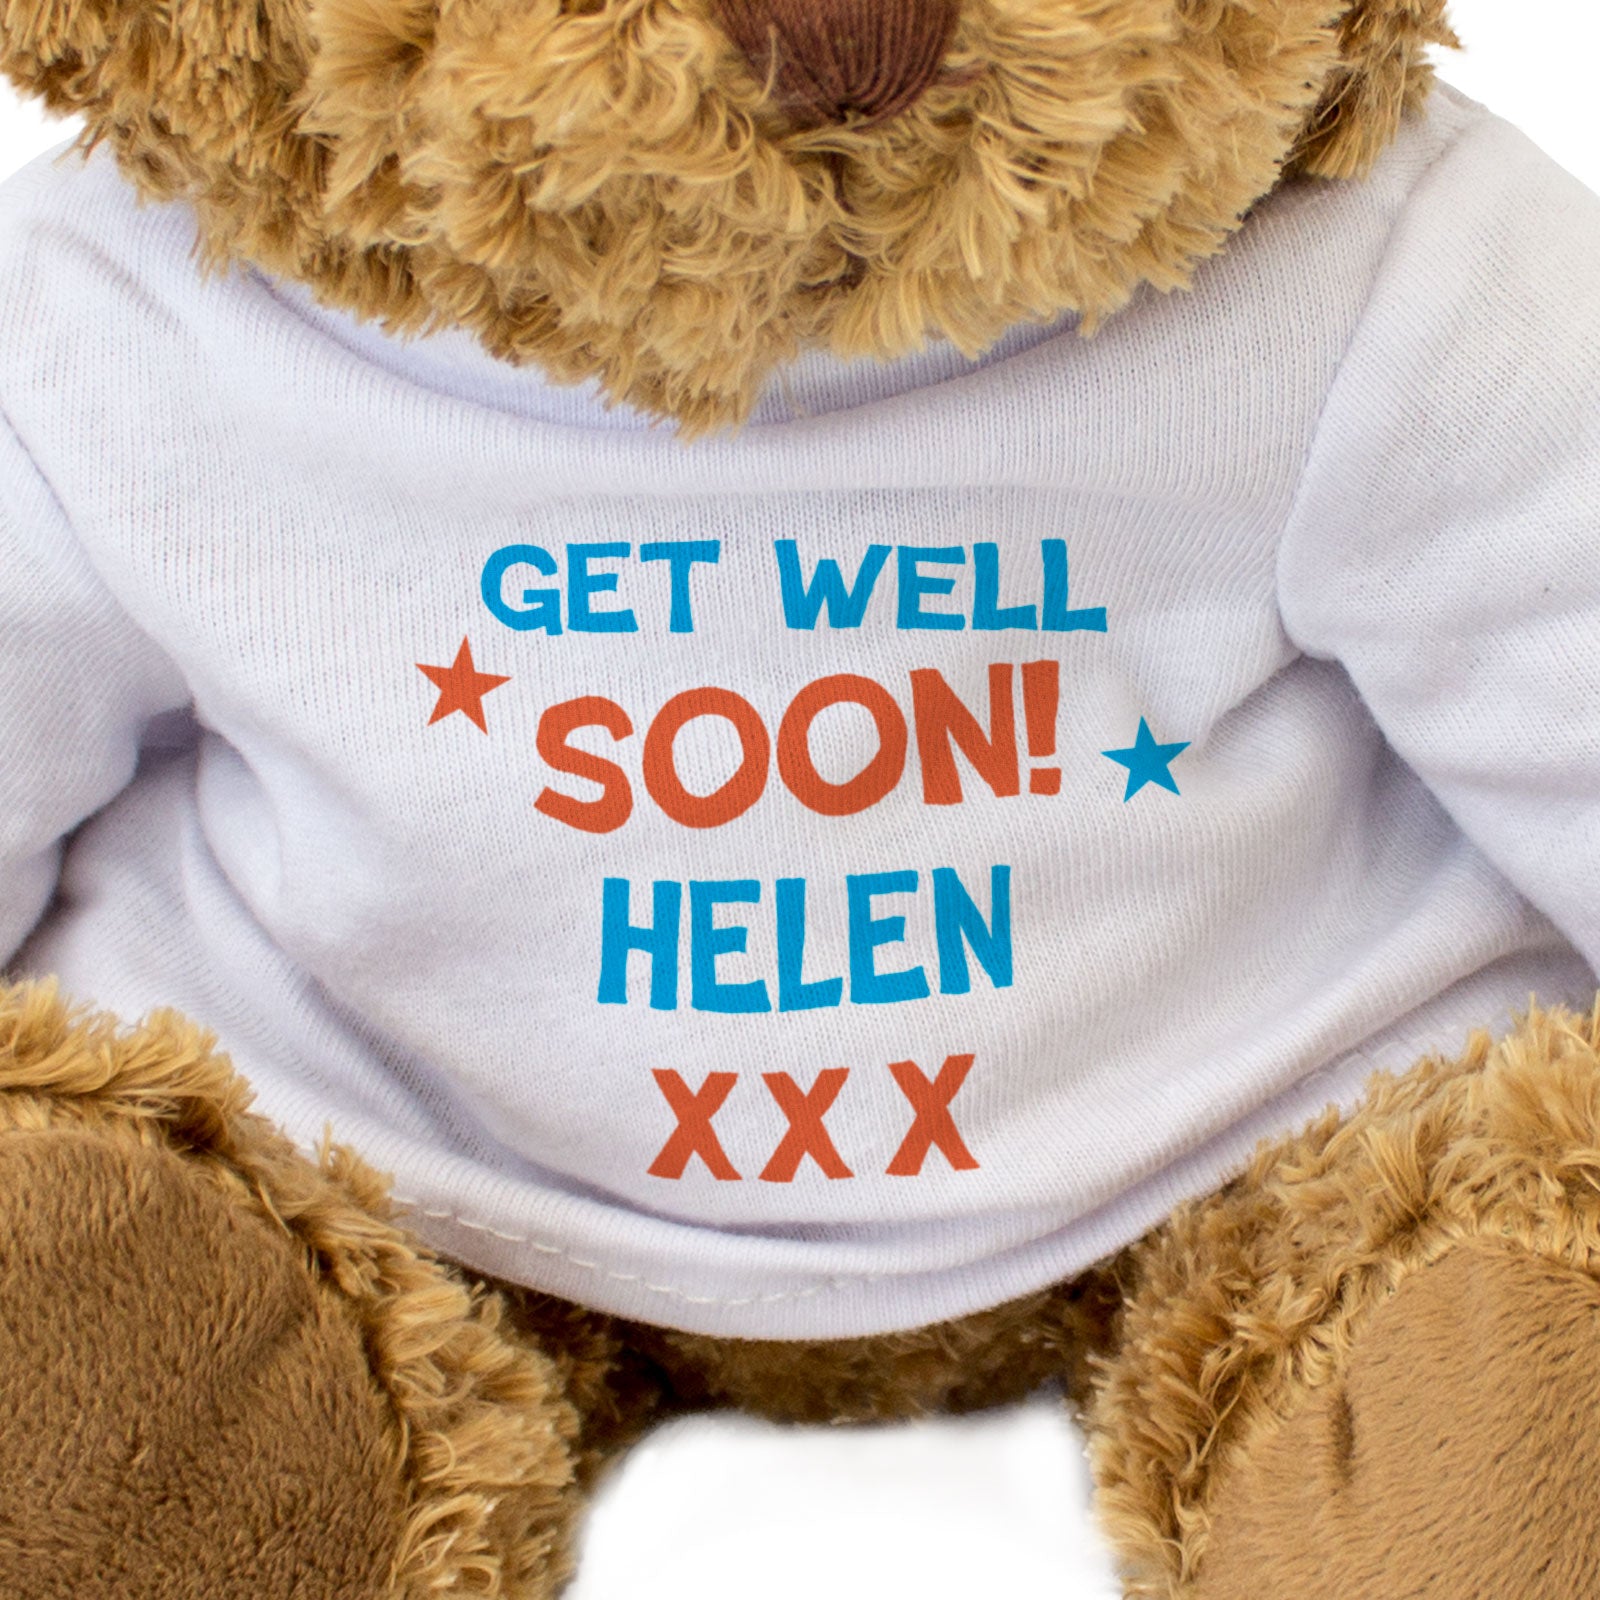 Get Well Soon Helen - Teddy Bear